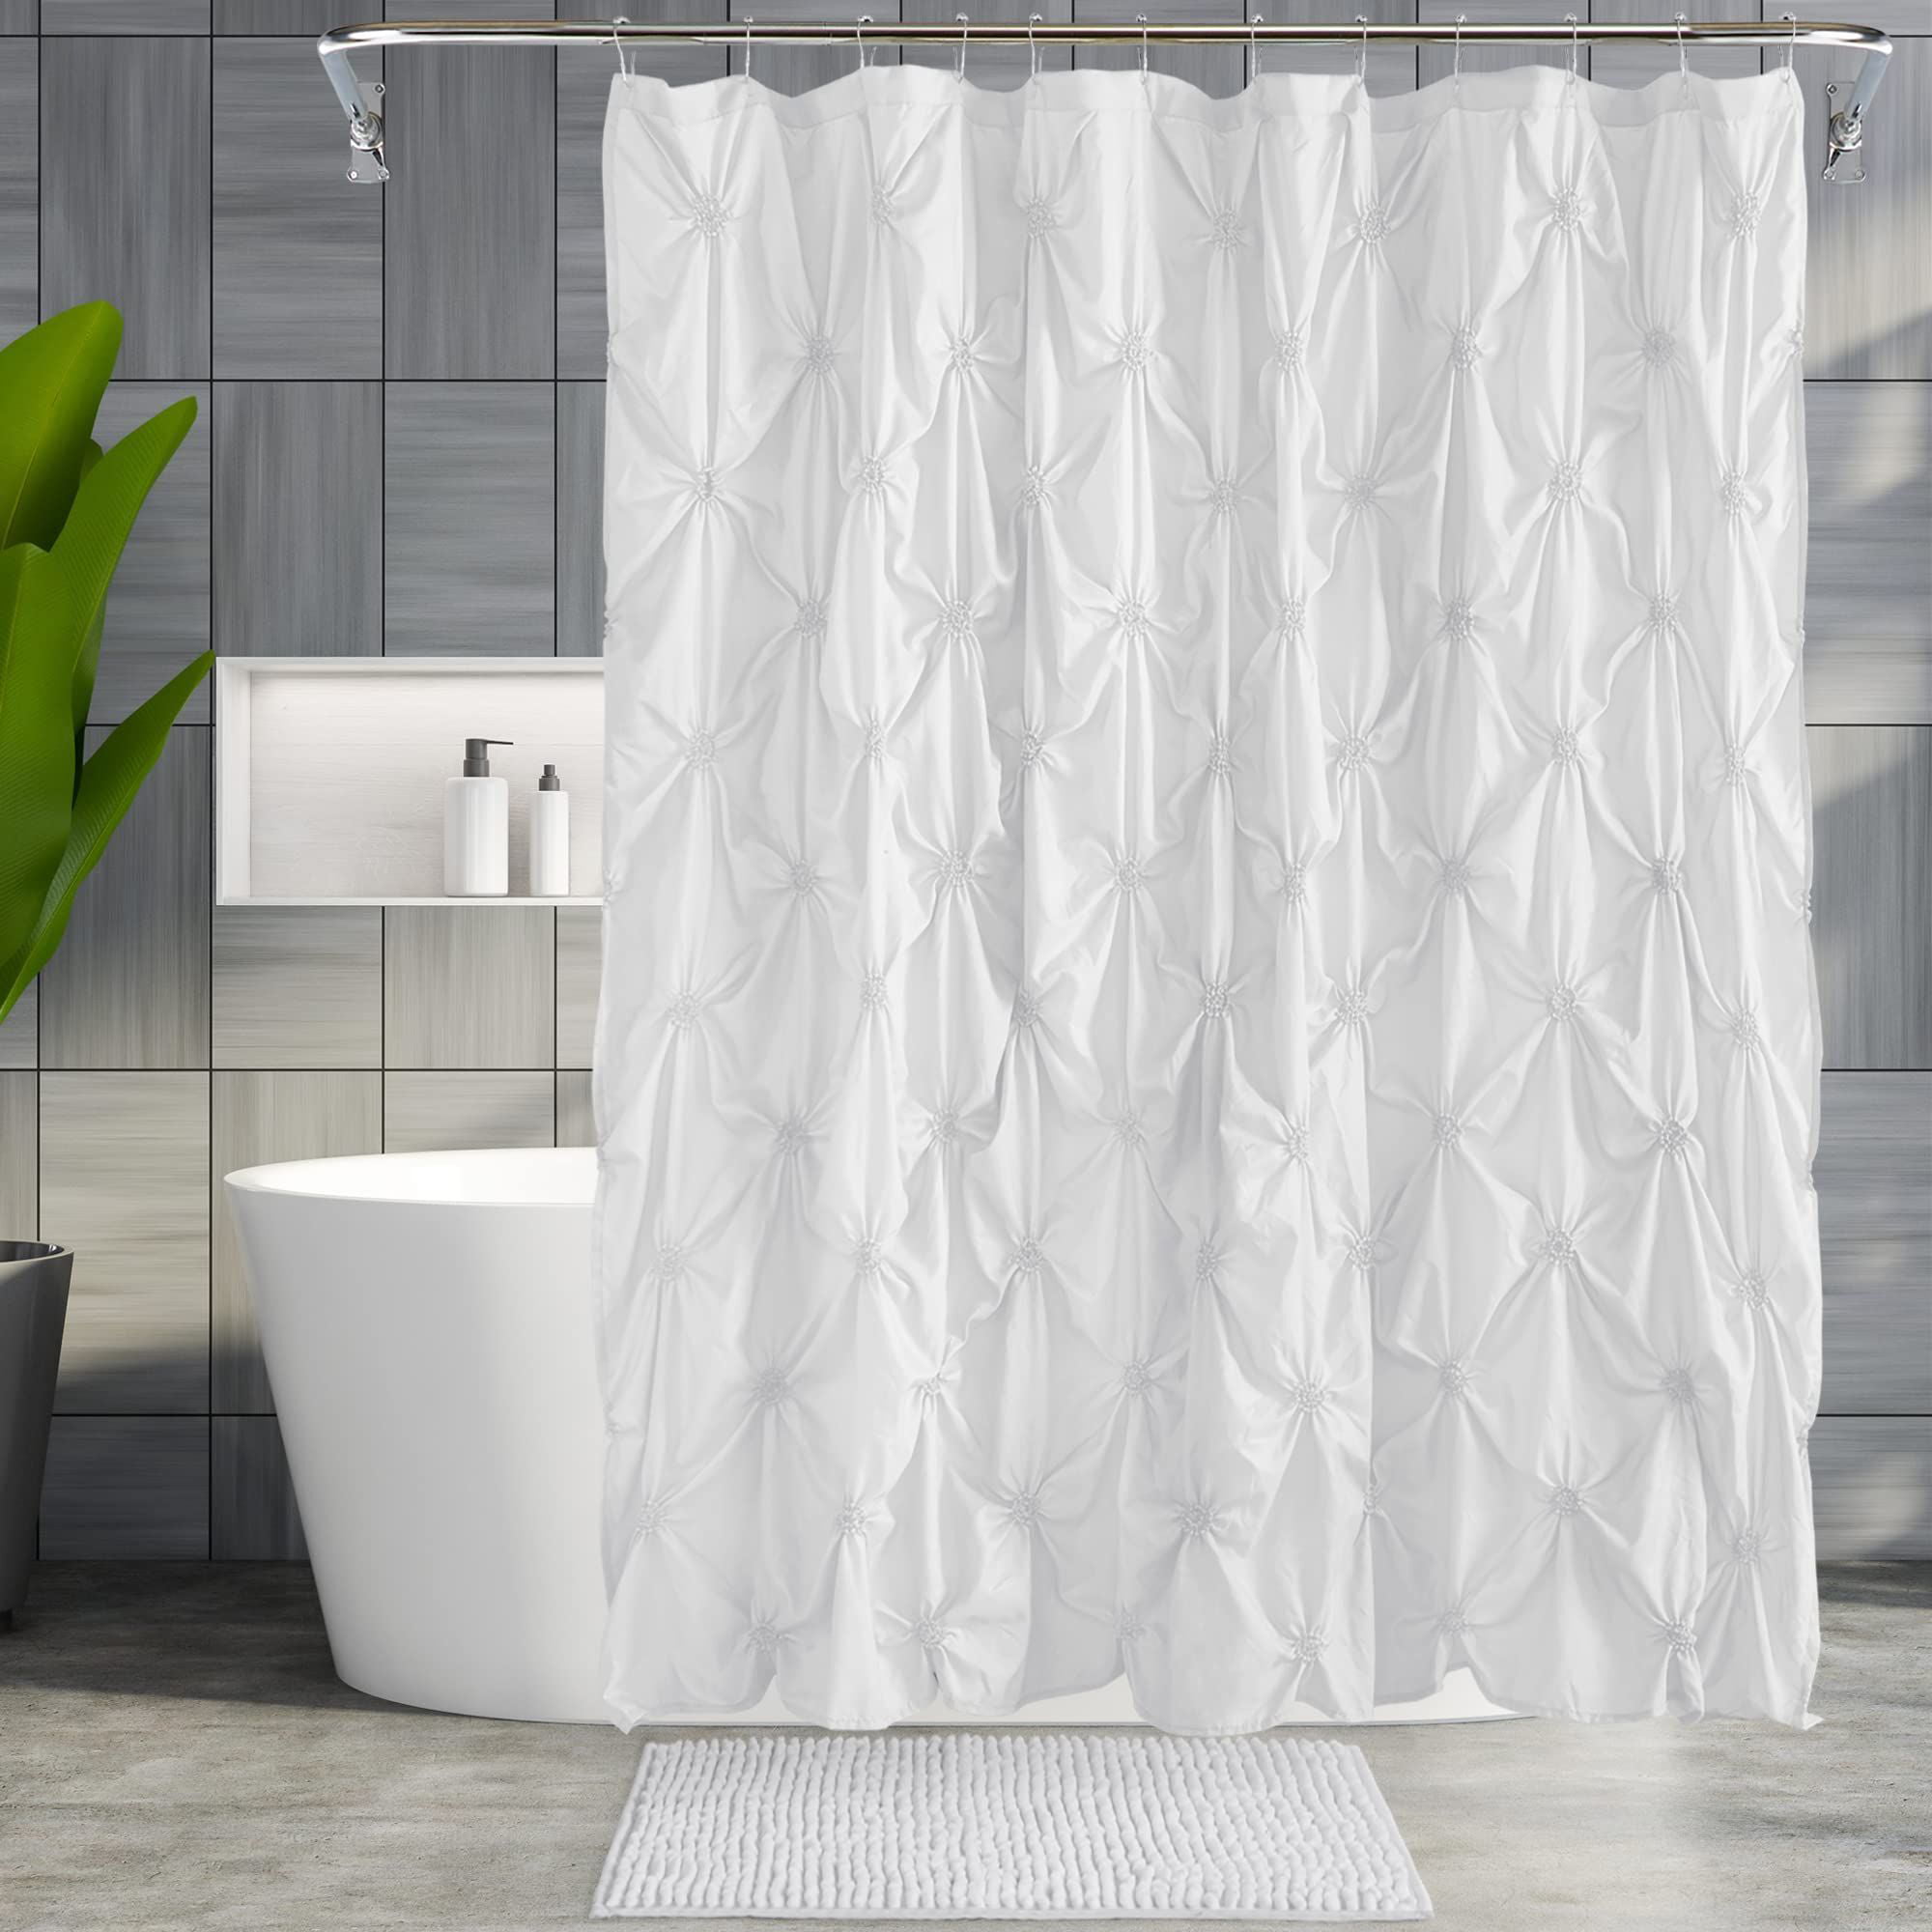 72x72" Bathroom waterproof Shower Curtain 12 Hooks & Bath Mat Paris play Decor 